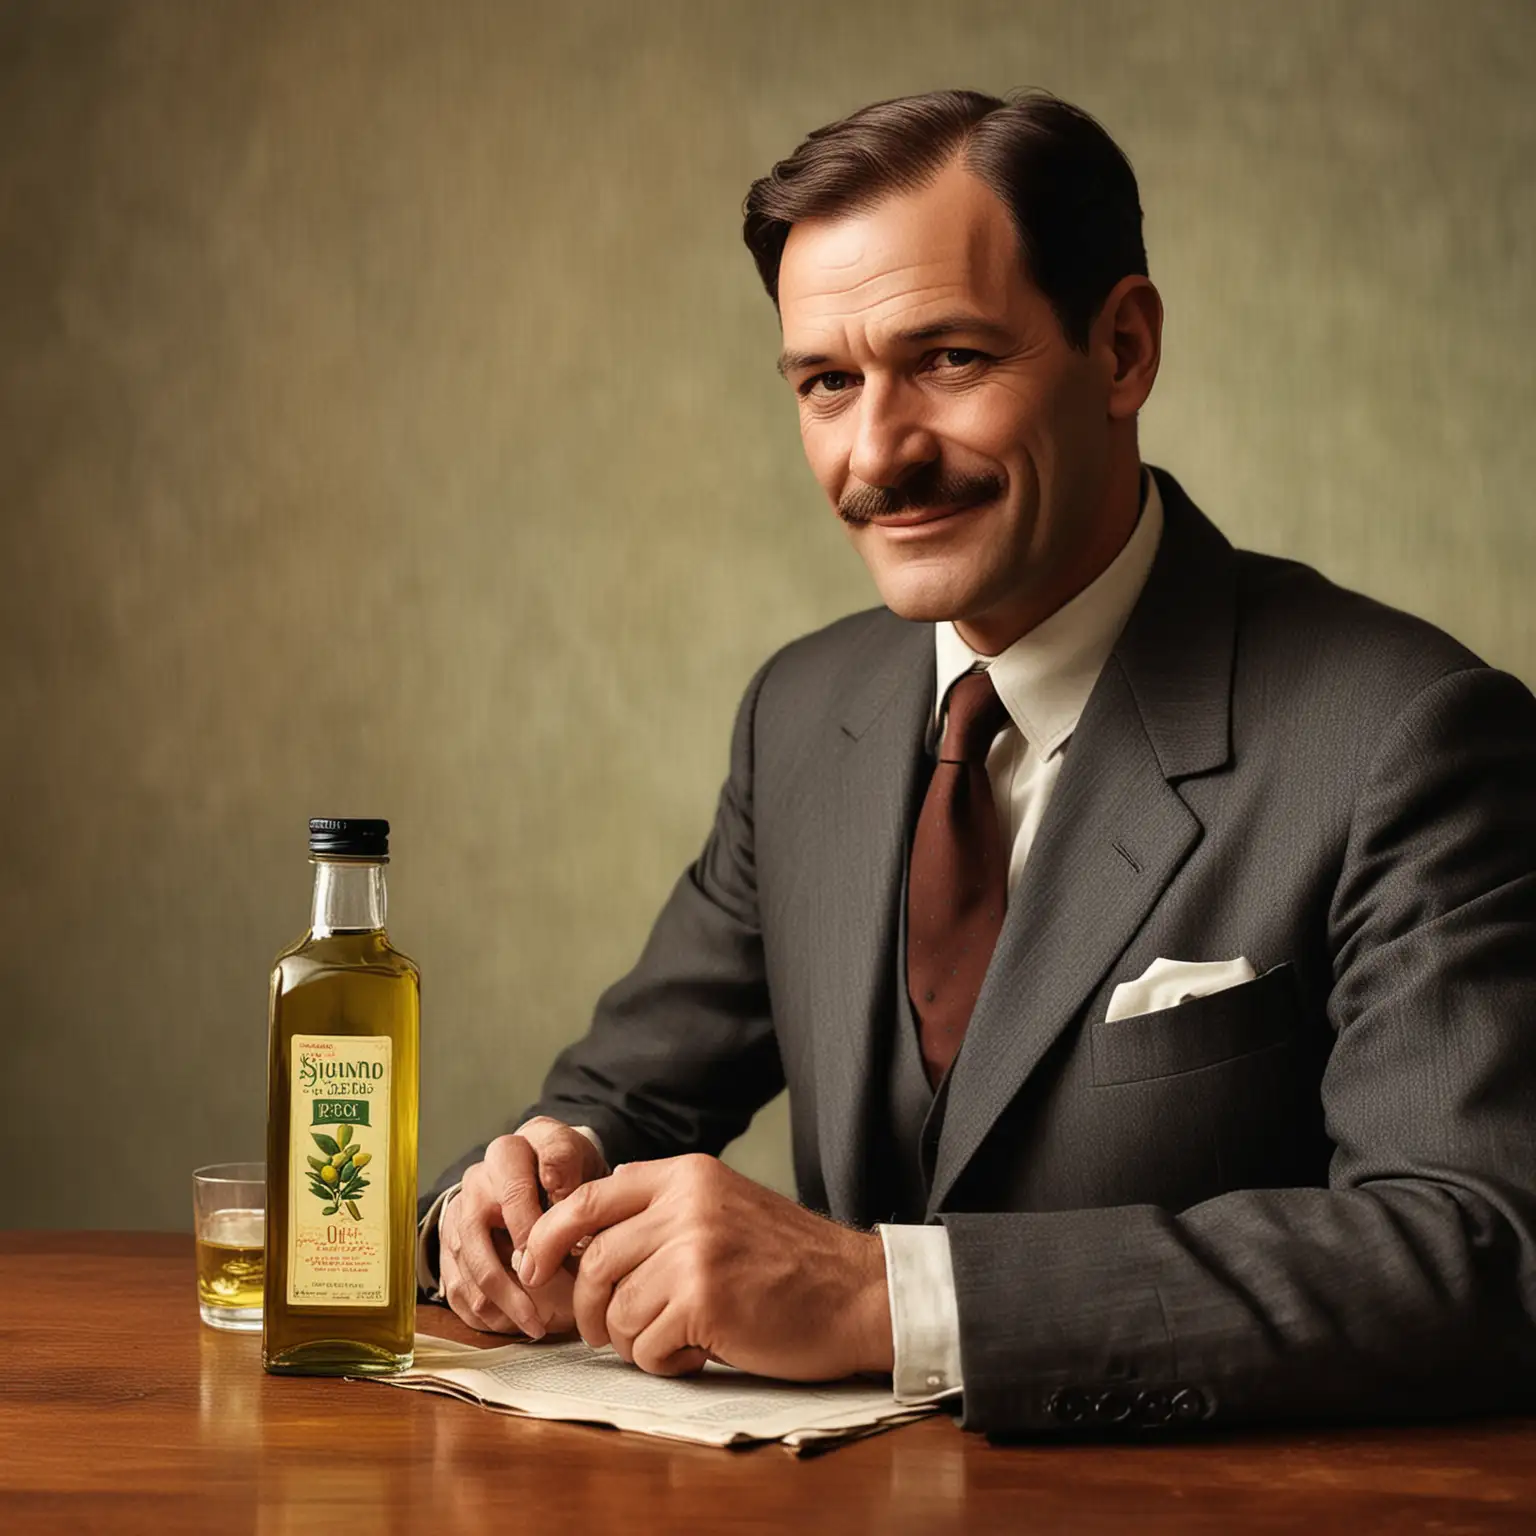 Mid Century Man Resembling Sigmund Freud Smirking at Large Olive Oil Bottle